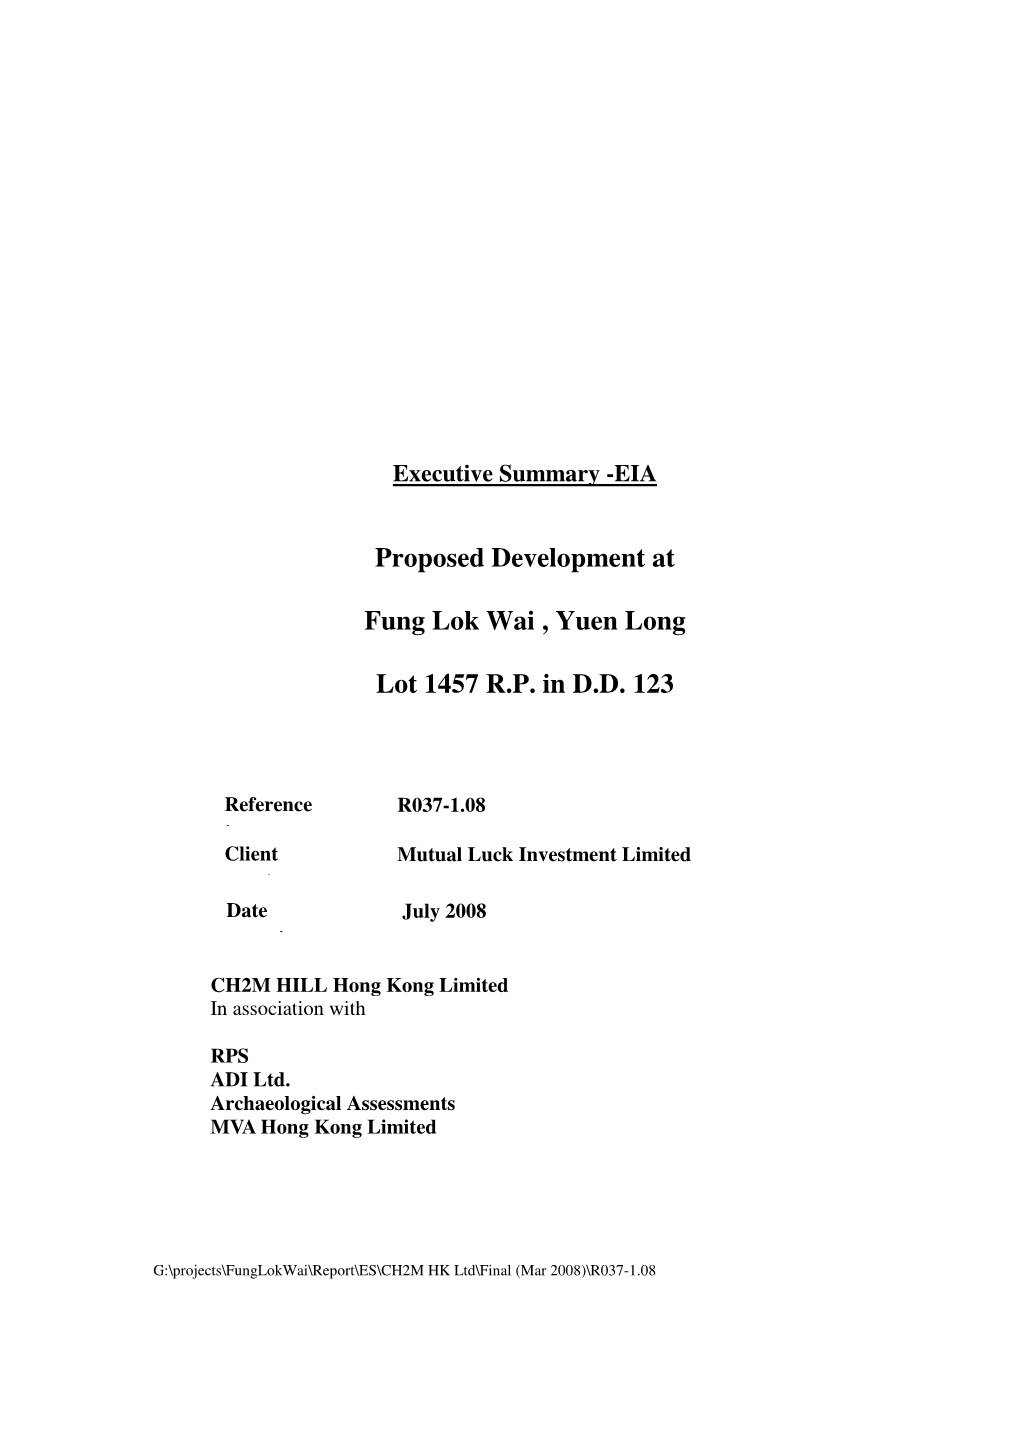 Proposed Development at Fung Lok Wai , Yuen Long Lot 1457 R.P. In